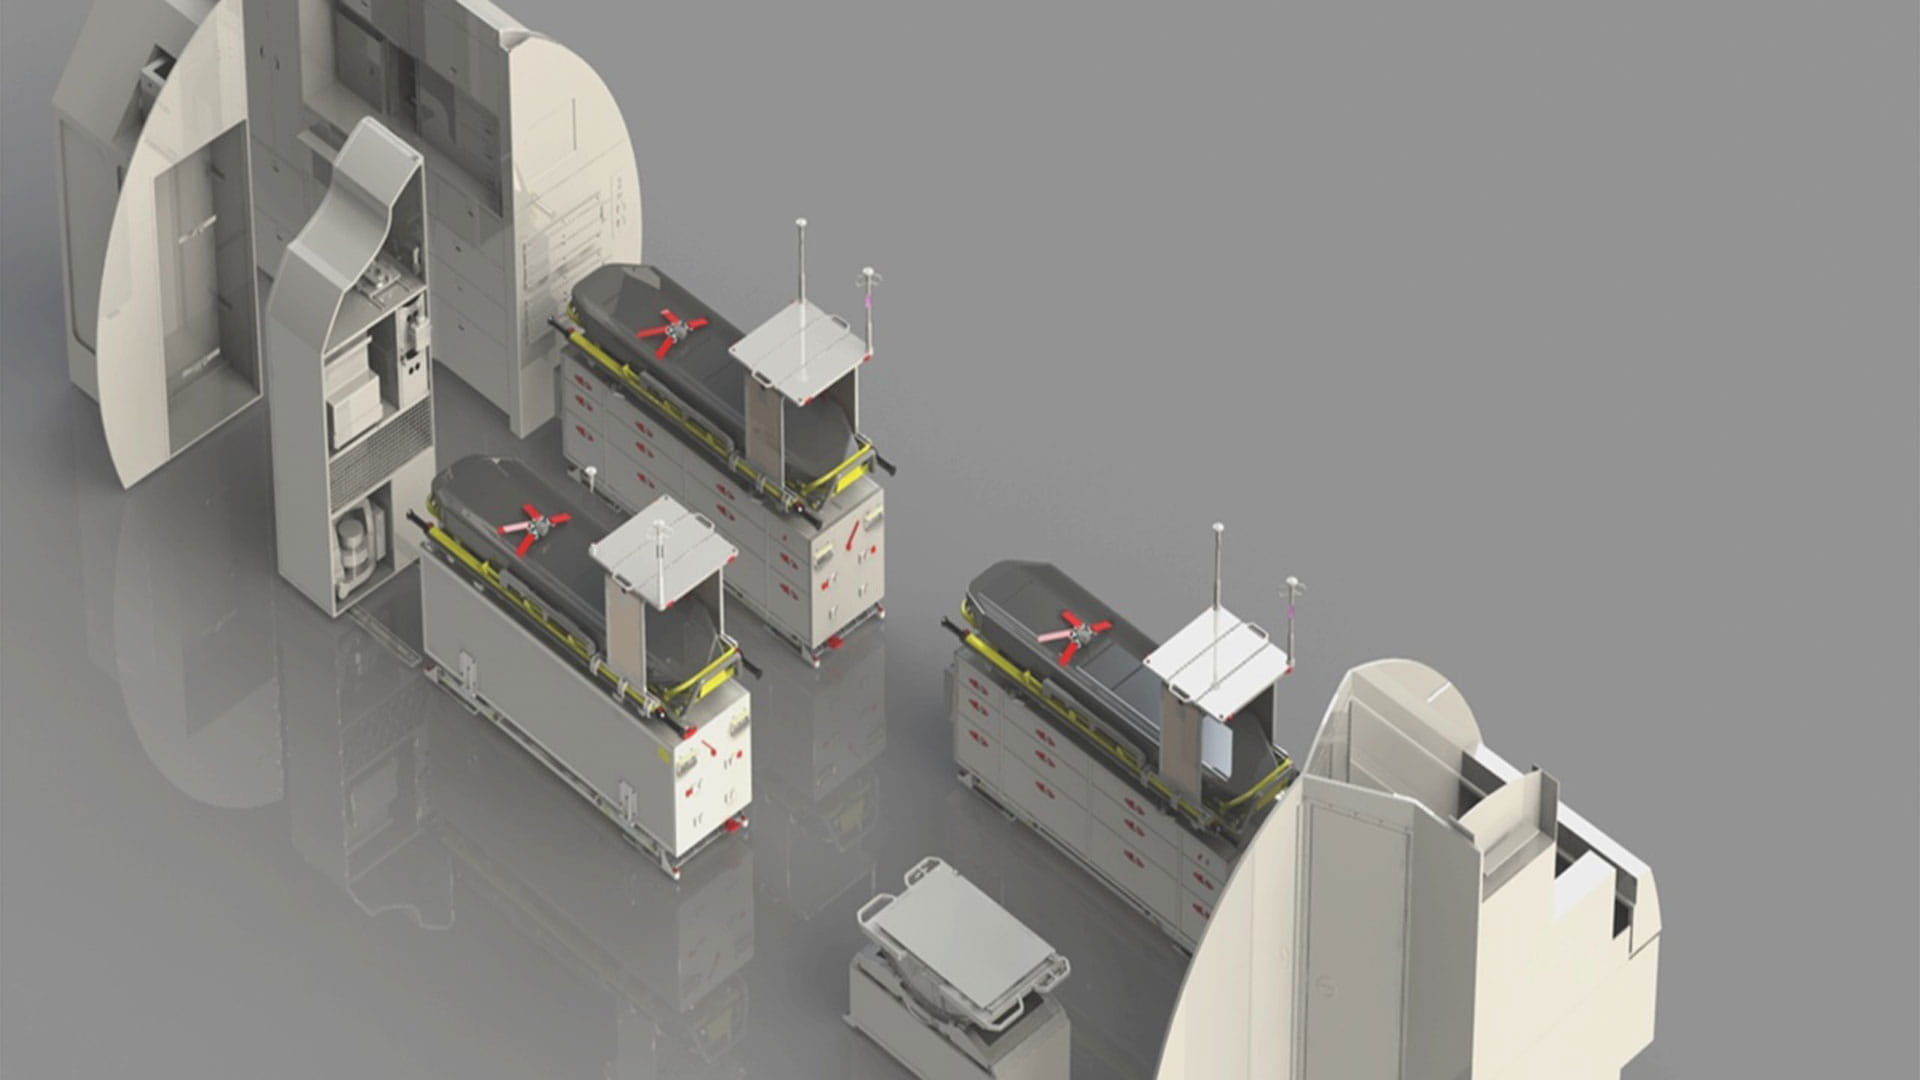 3D rendering of aircraft interiors